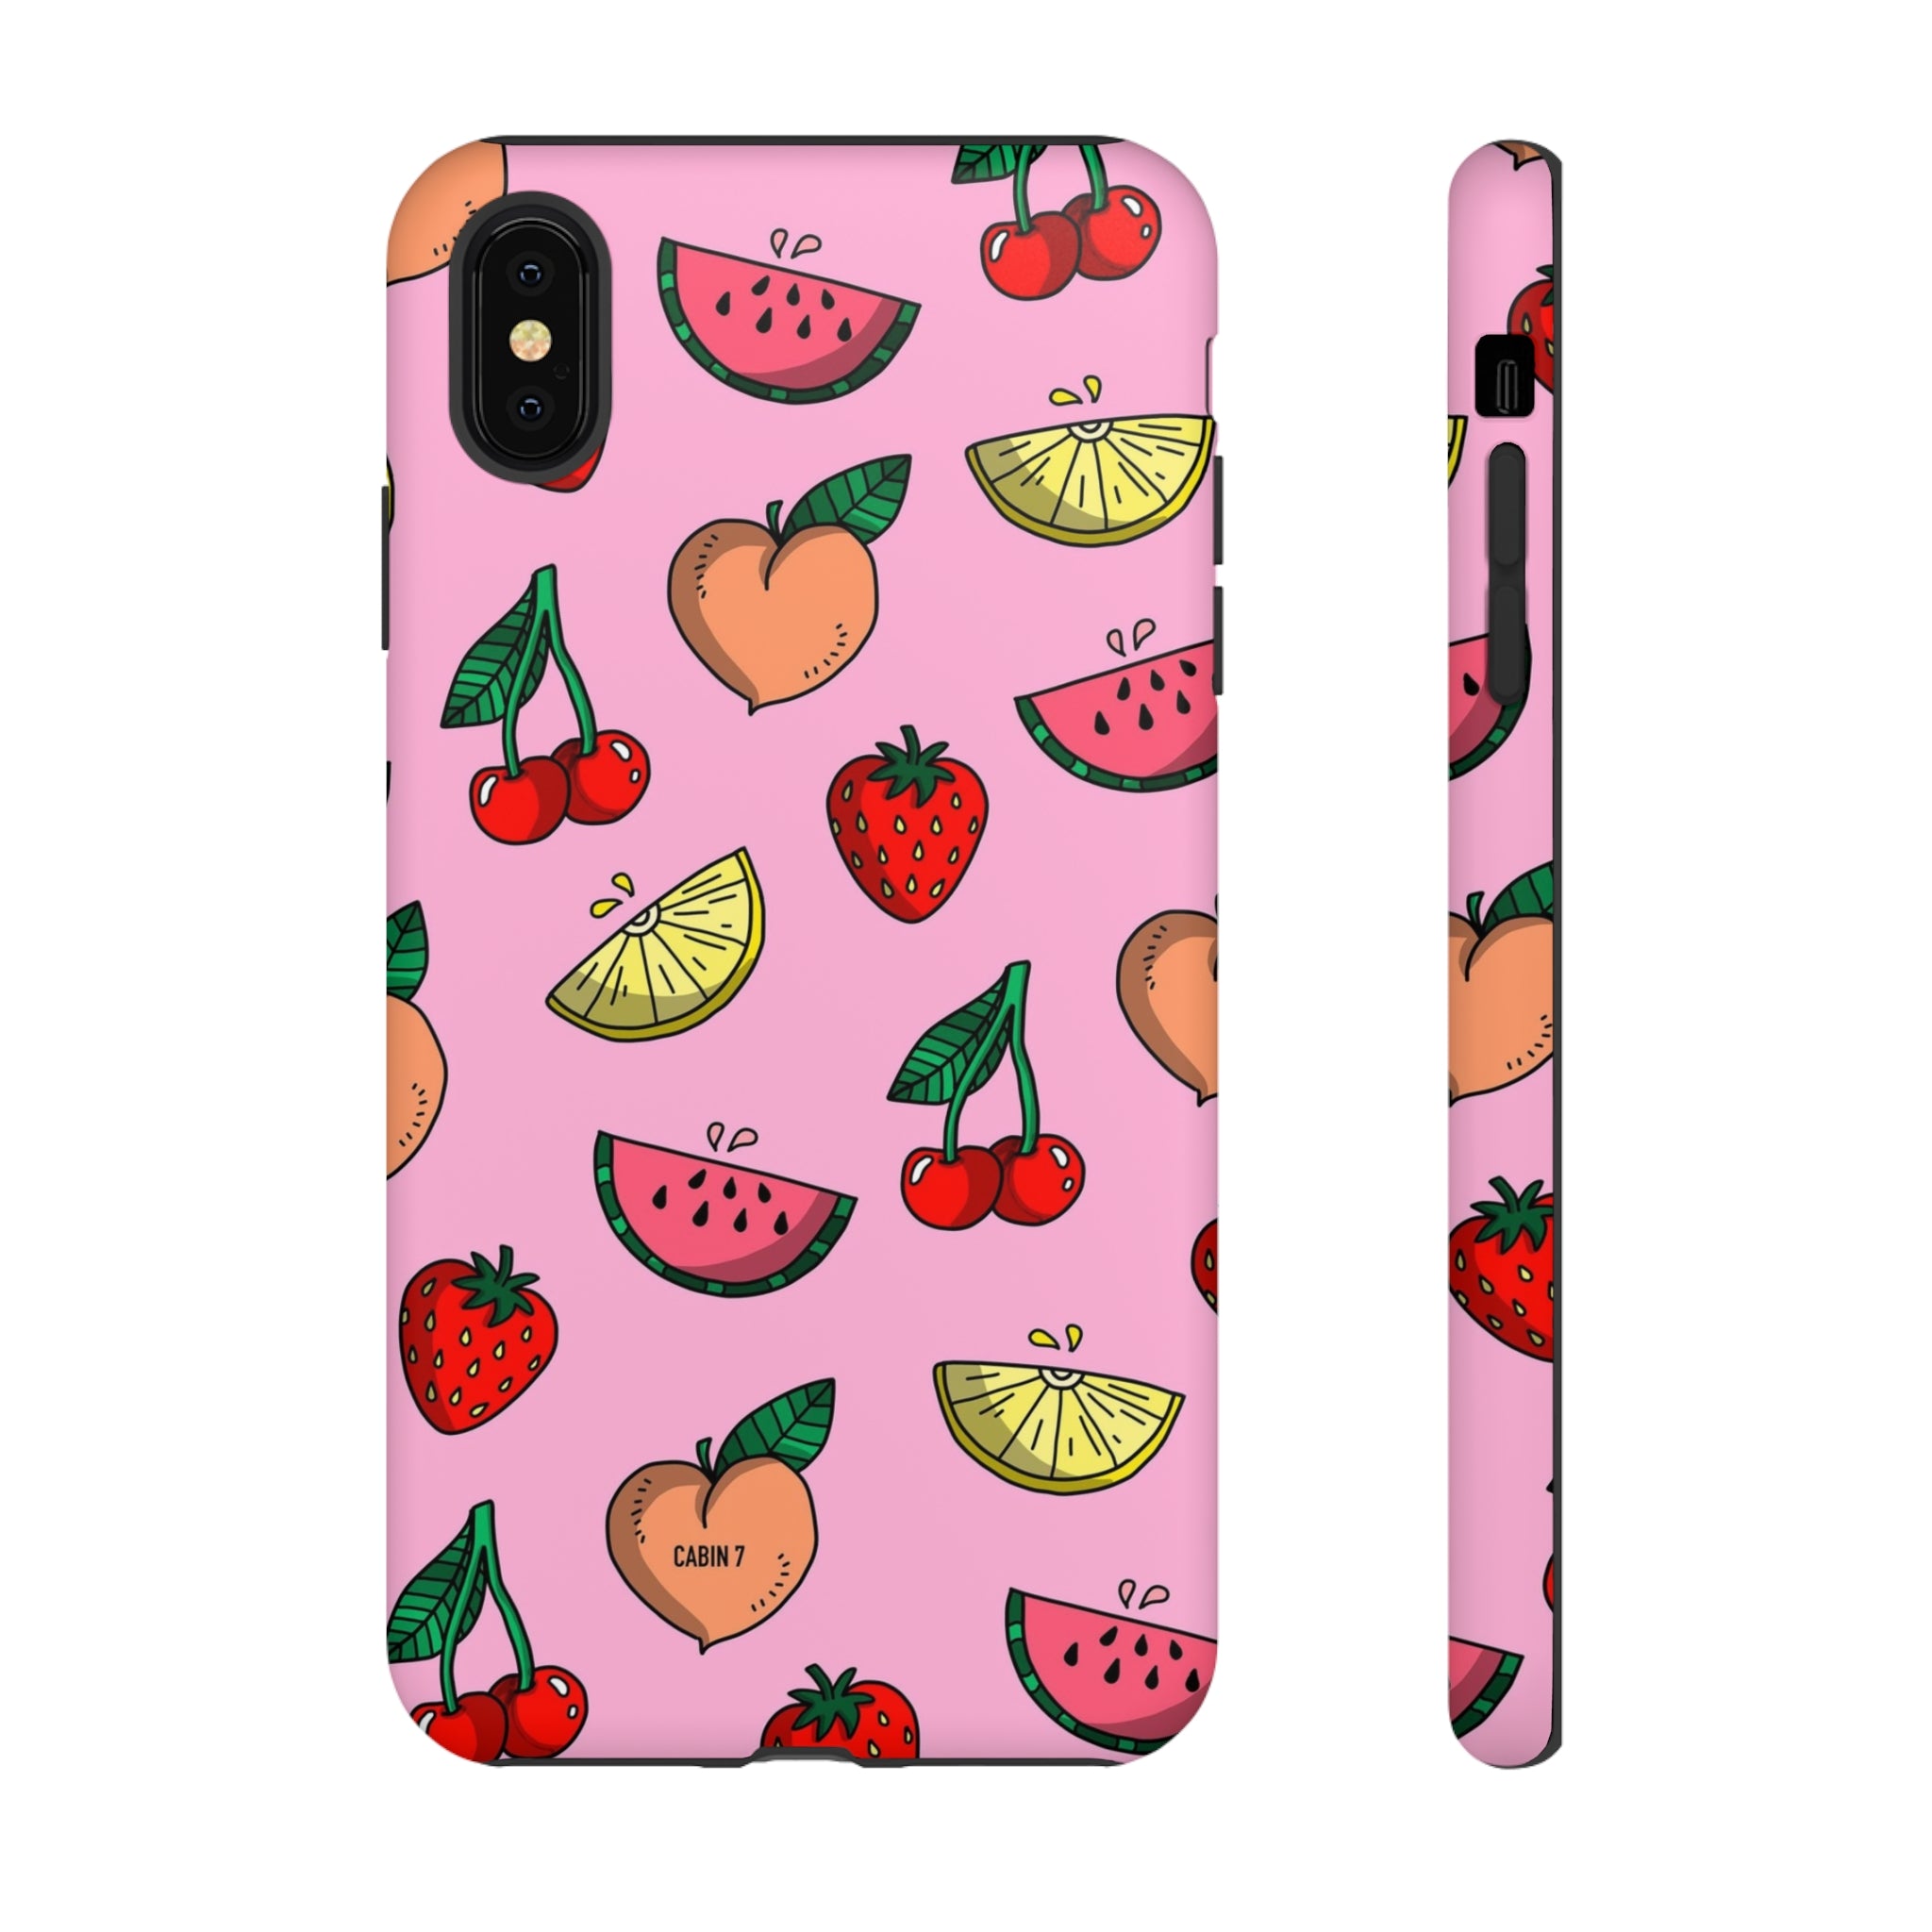 Fruit Punch Phone Case